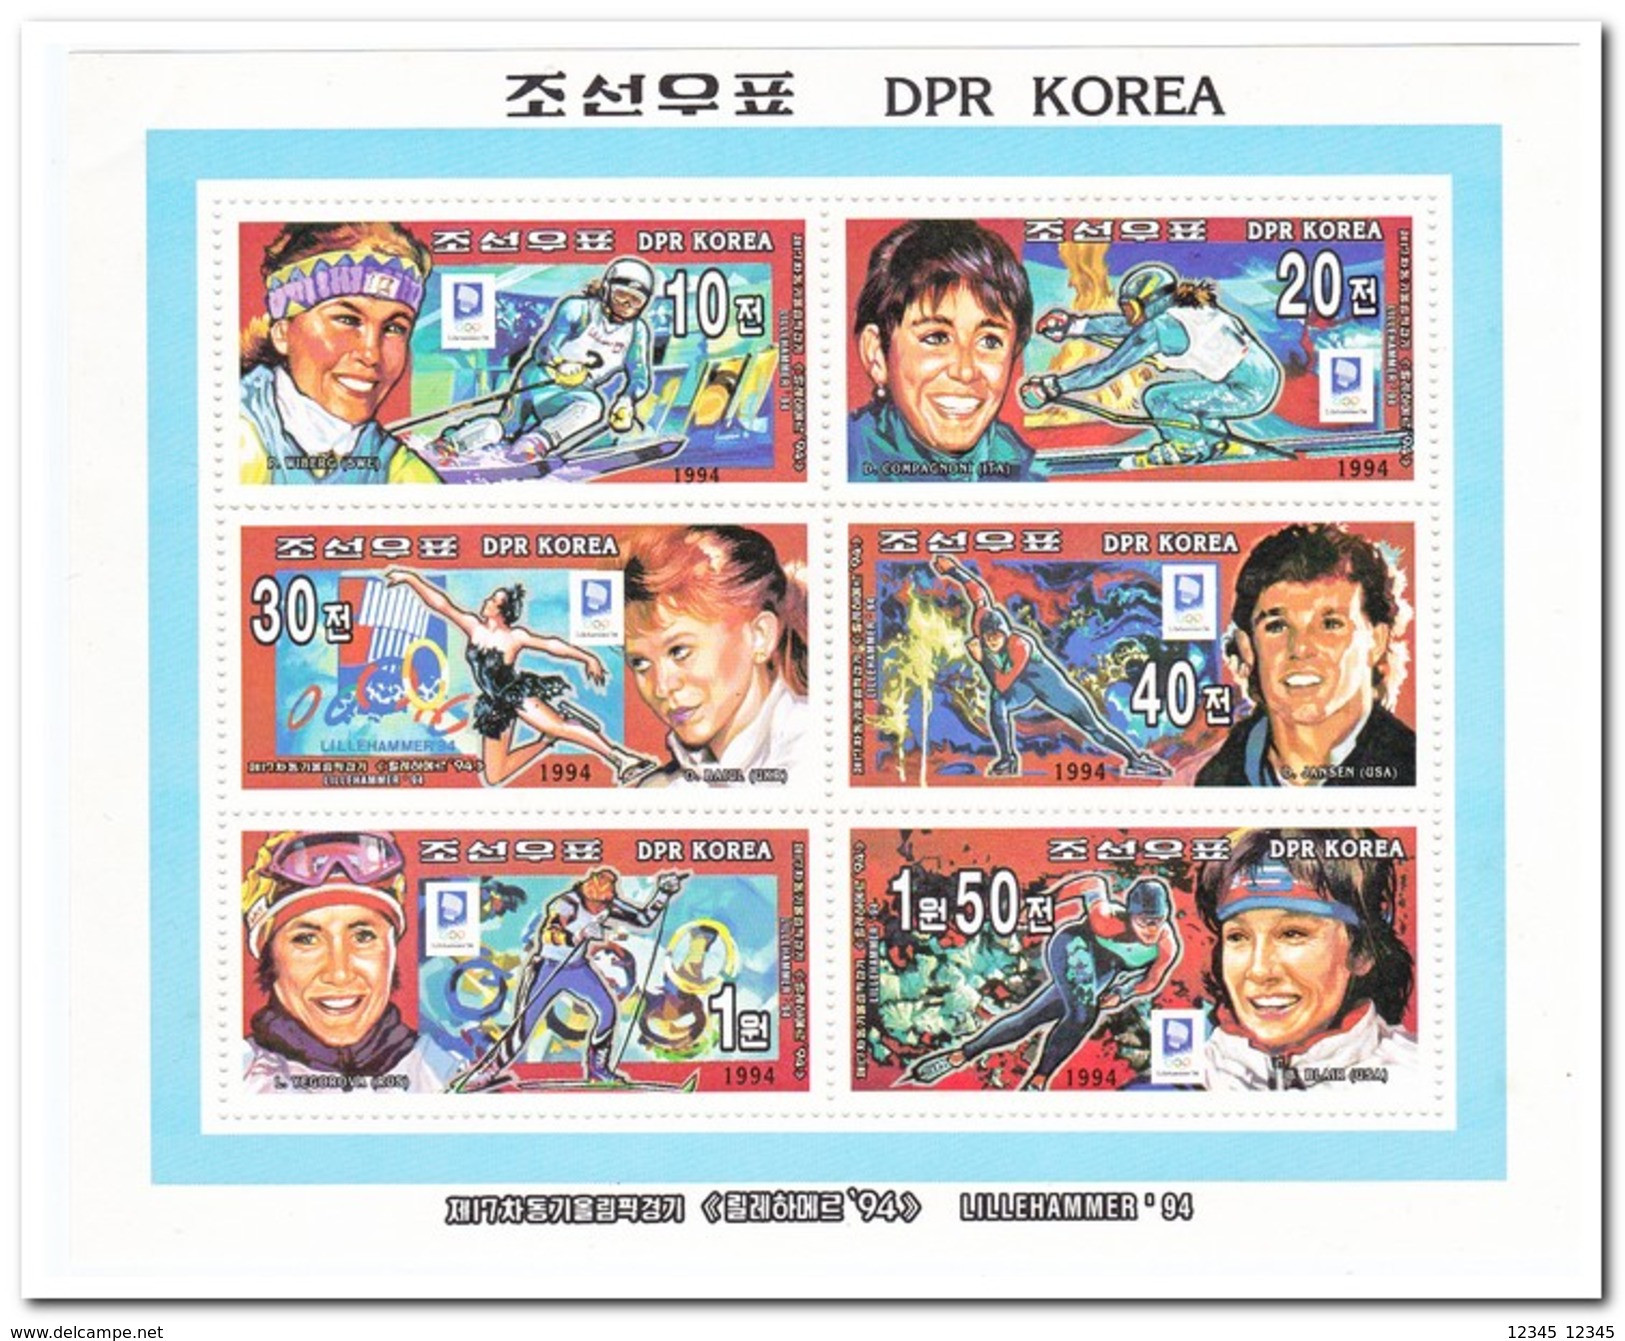 Noord Korea 1994, Postfris MNH, Olympic Games - Corea Del Norte